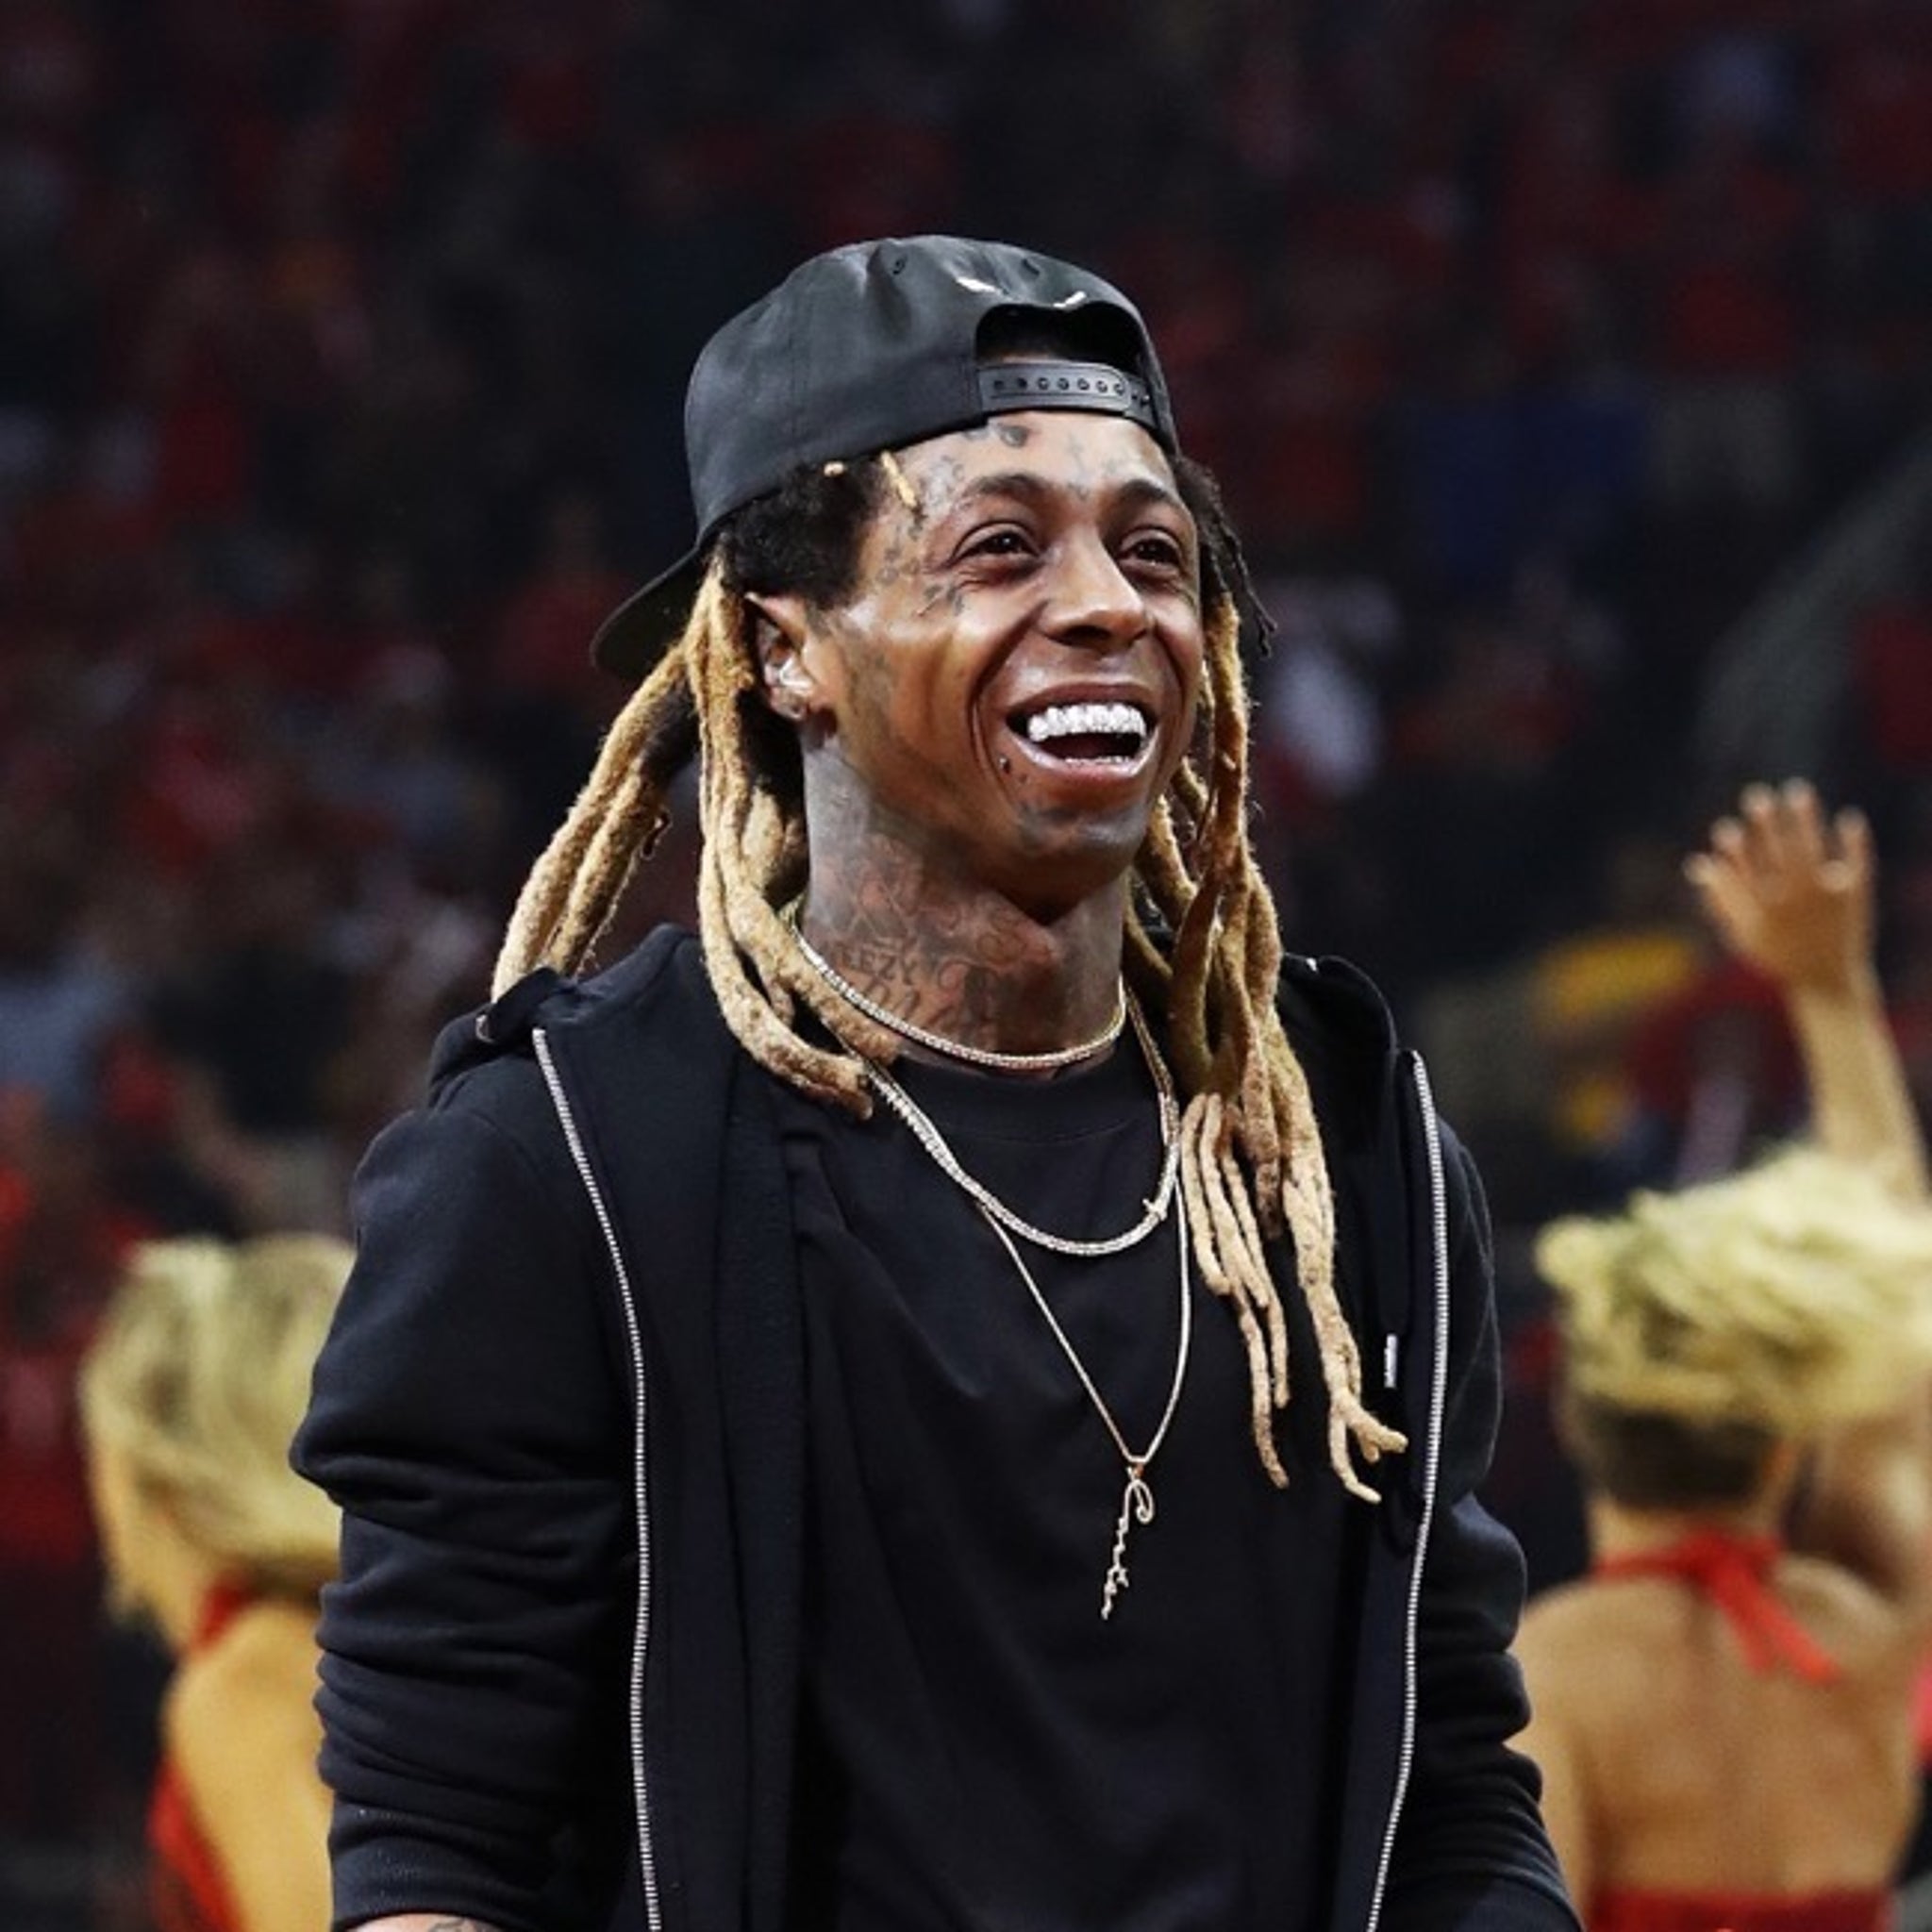 Lil Wayne & Travis Scott Courtside For Rockets/Warriors Beatdown